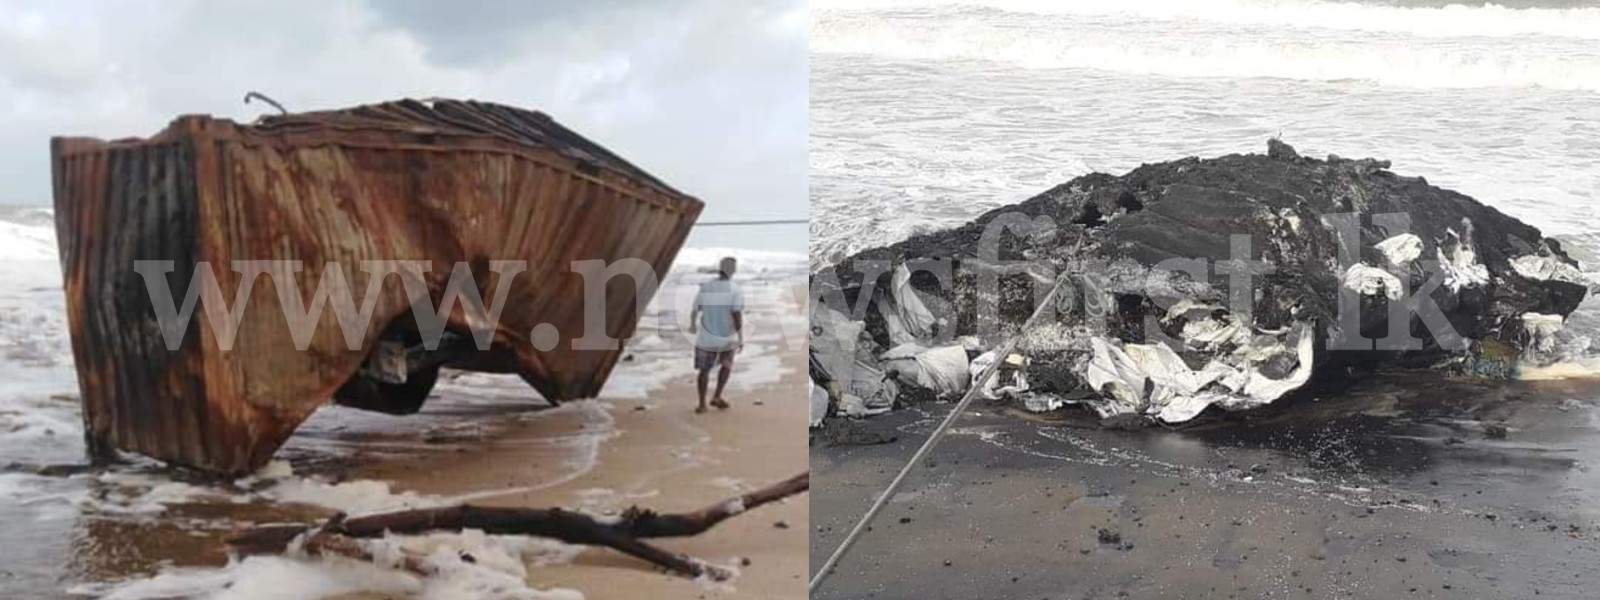 Sri Lanka’s Western coast contaminated with debris from burning ship